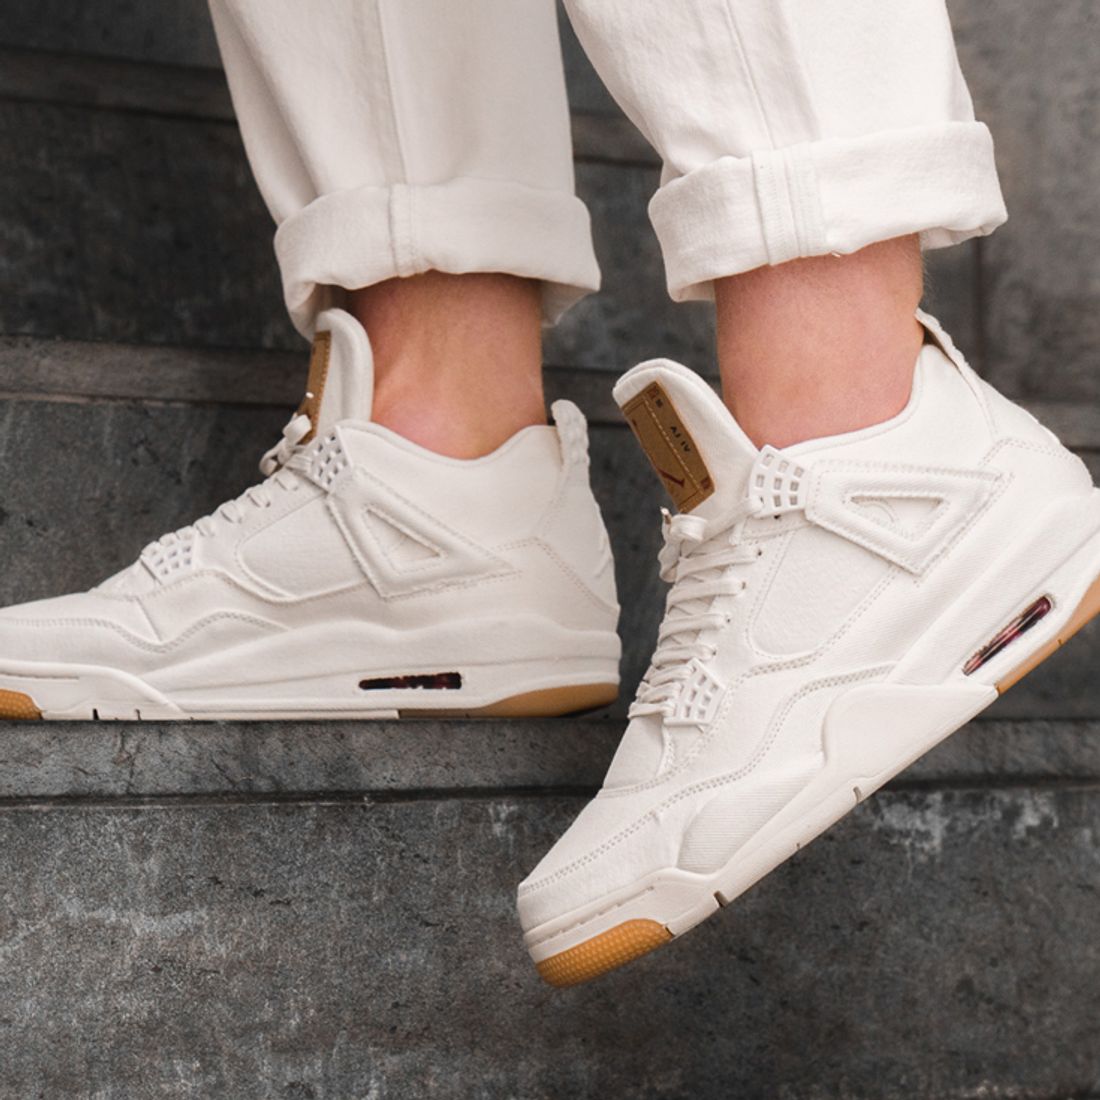 An On-Foot Look at the x Air Jordan 4s - Sneaker Freaker